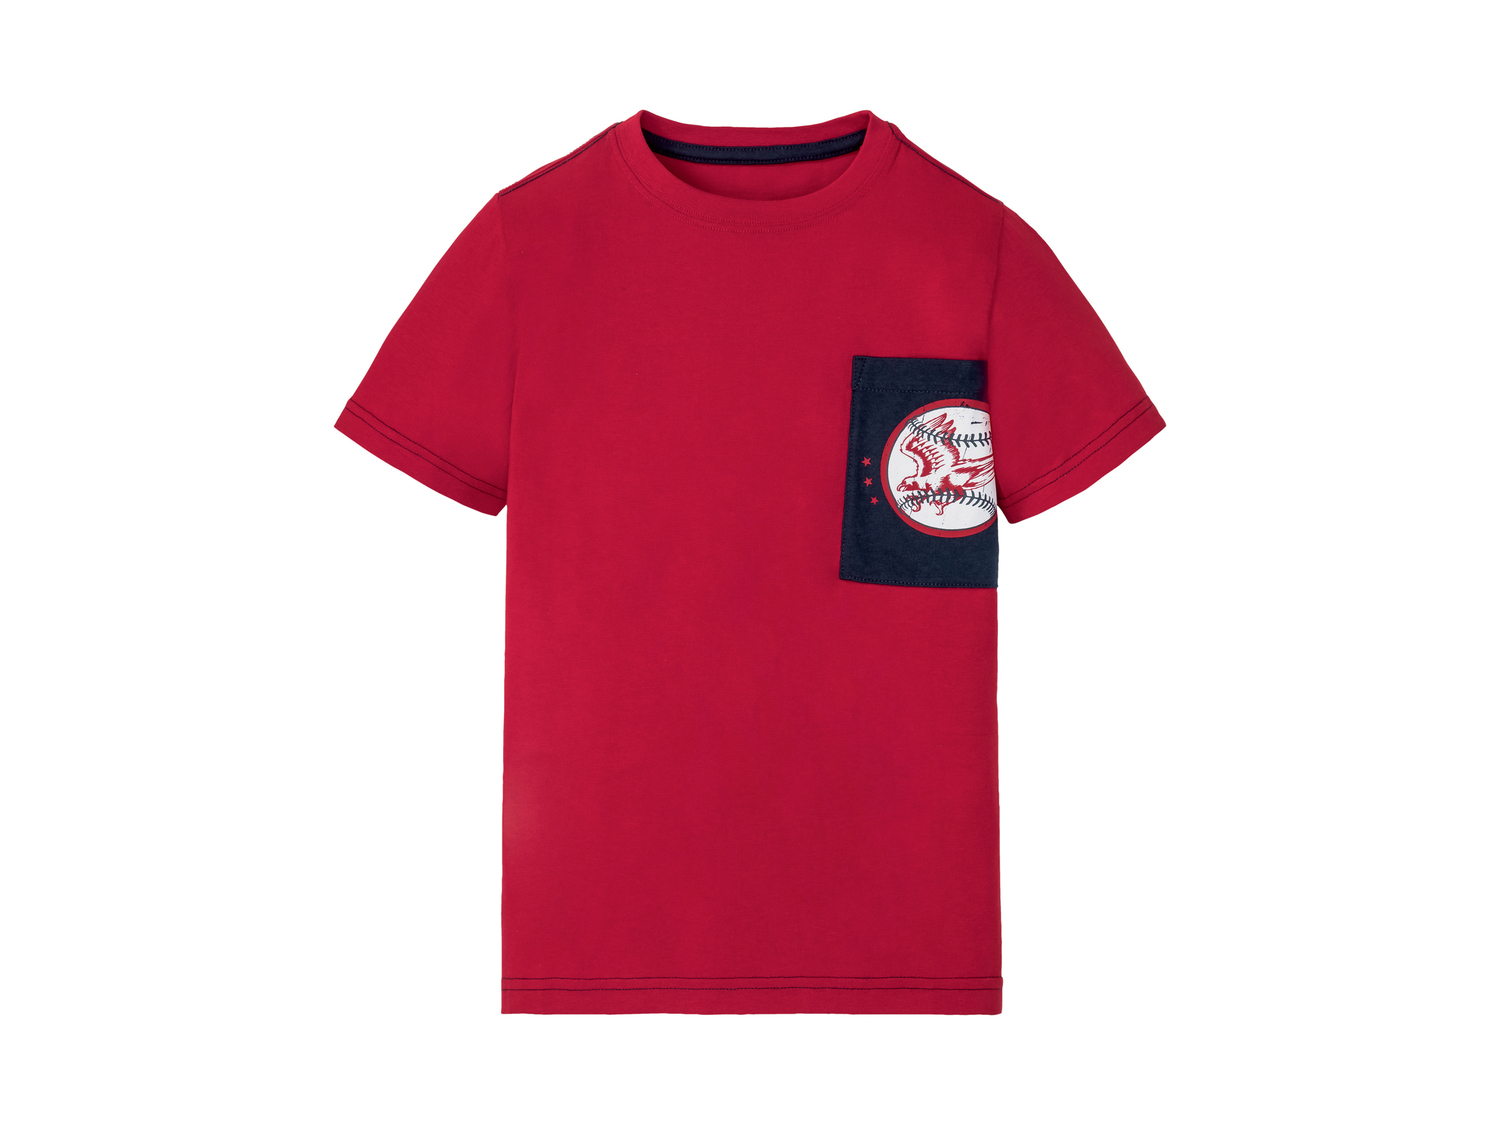 T-shirt da bambino Pepperts, prezzo 3.99 &#8364; 
Misure: 6-14 anni 
- 
Puro ...